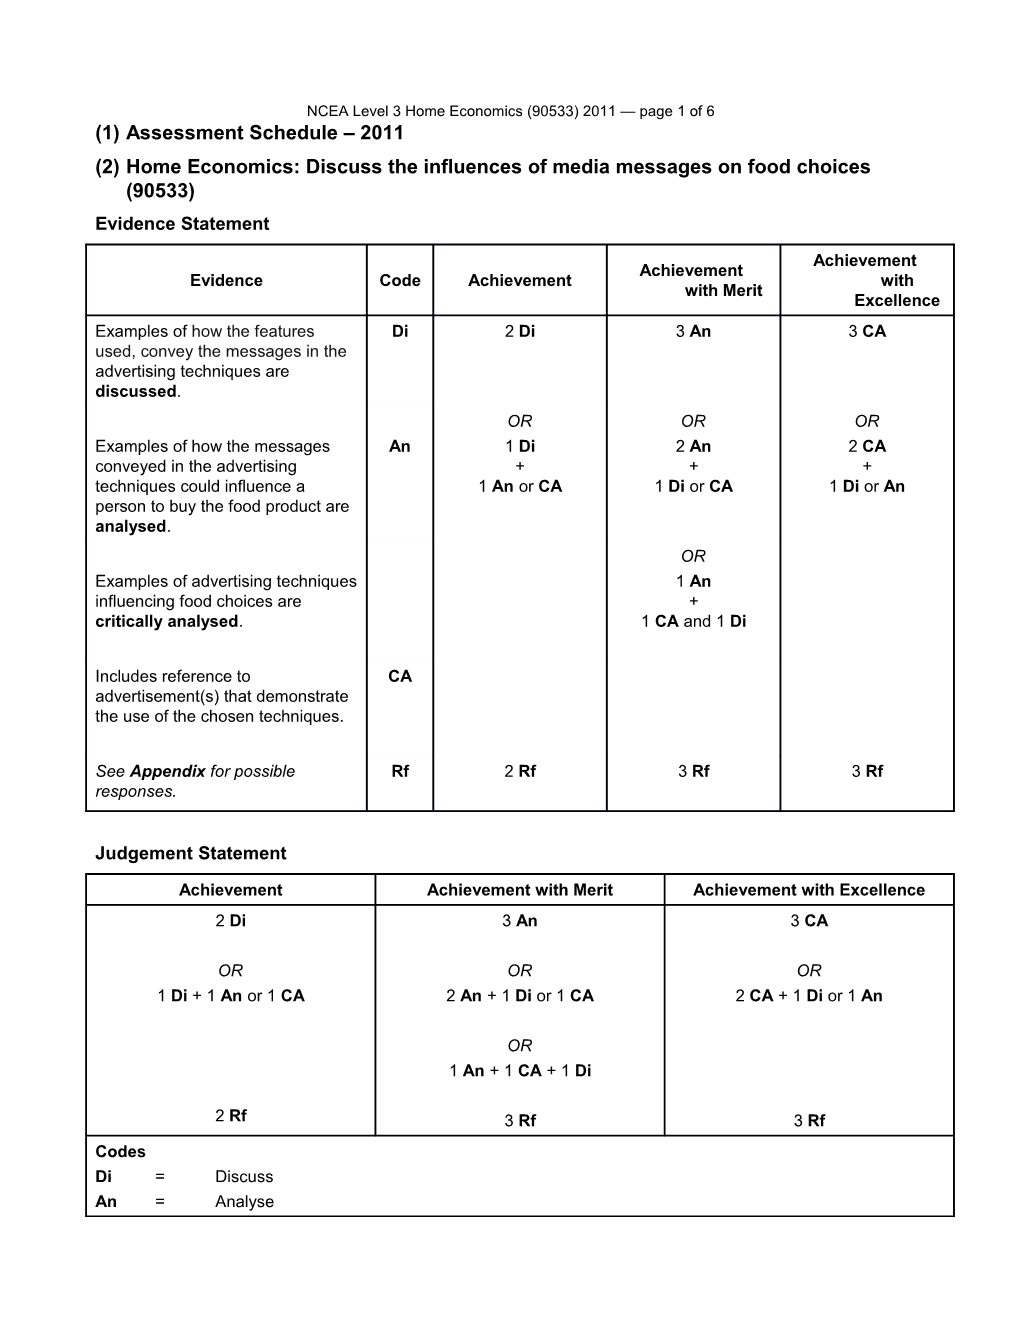 Level 3 Home Economics (90533) 2011 Assessment Schedule